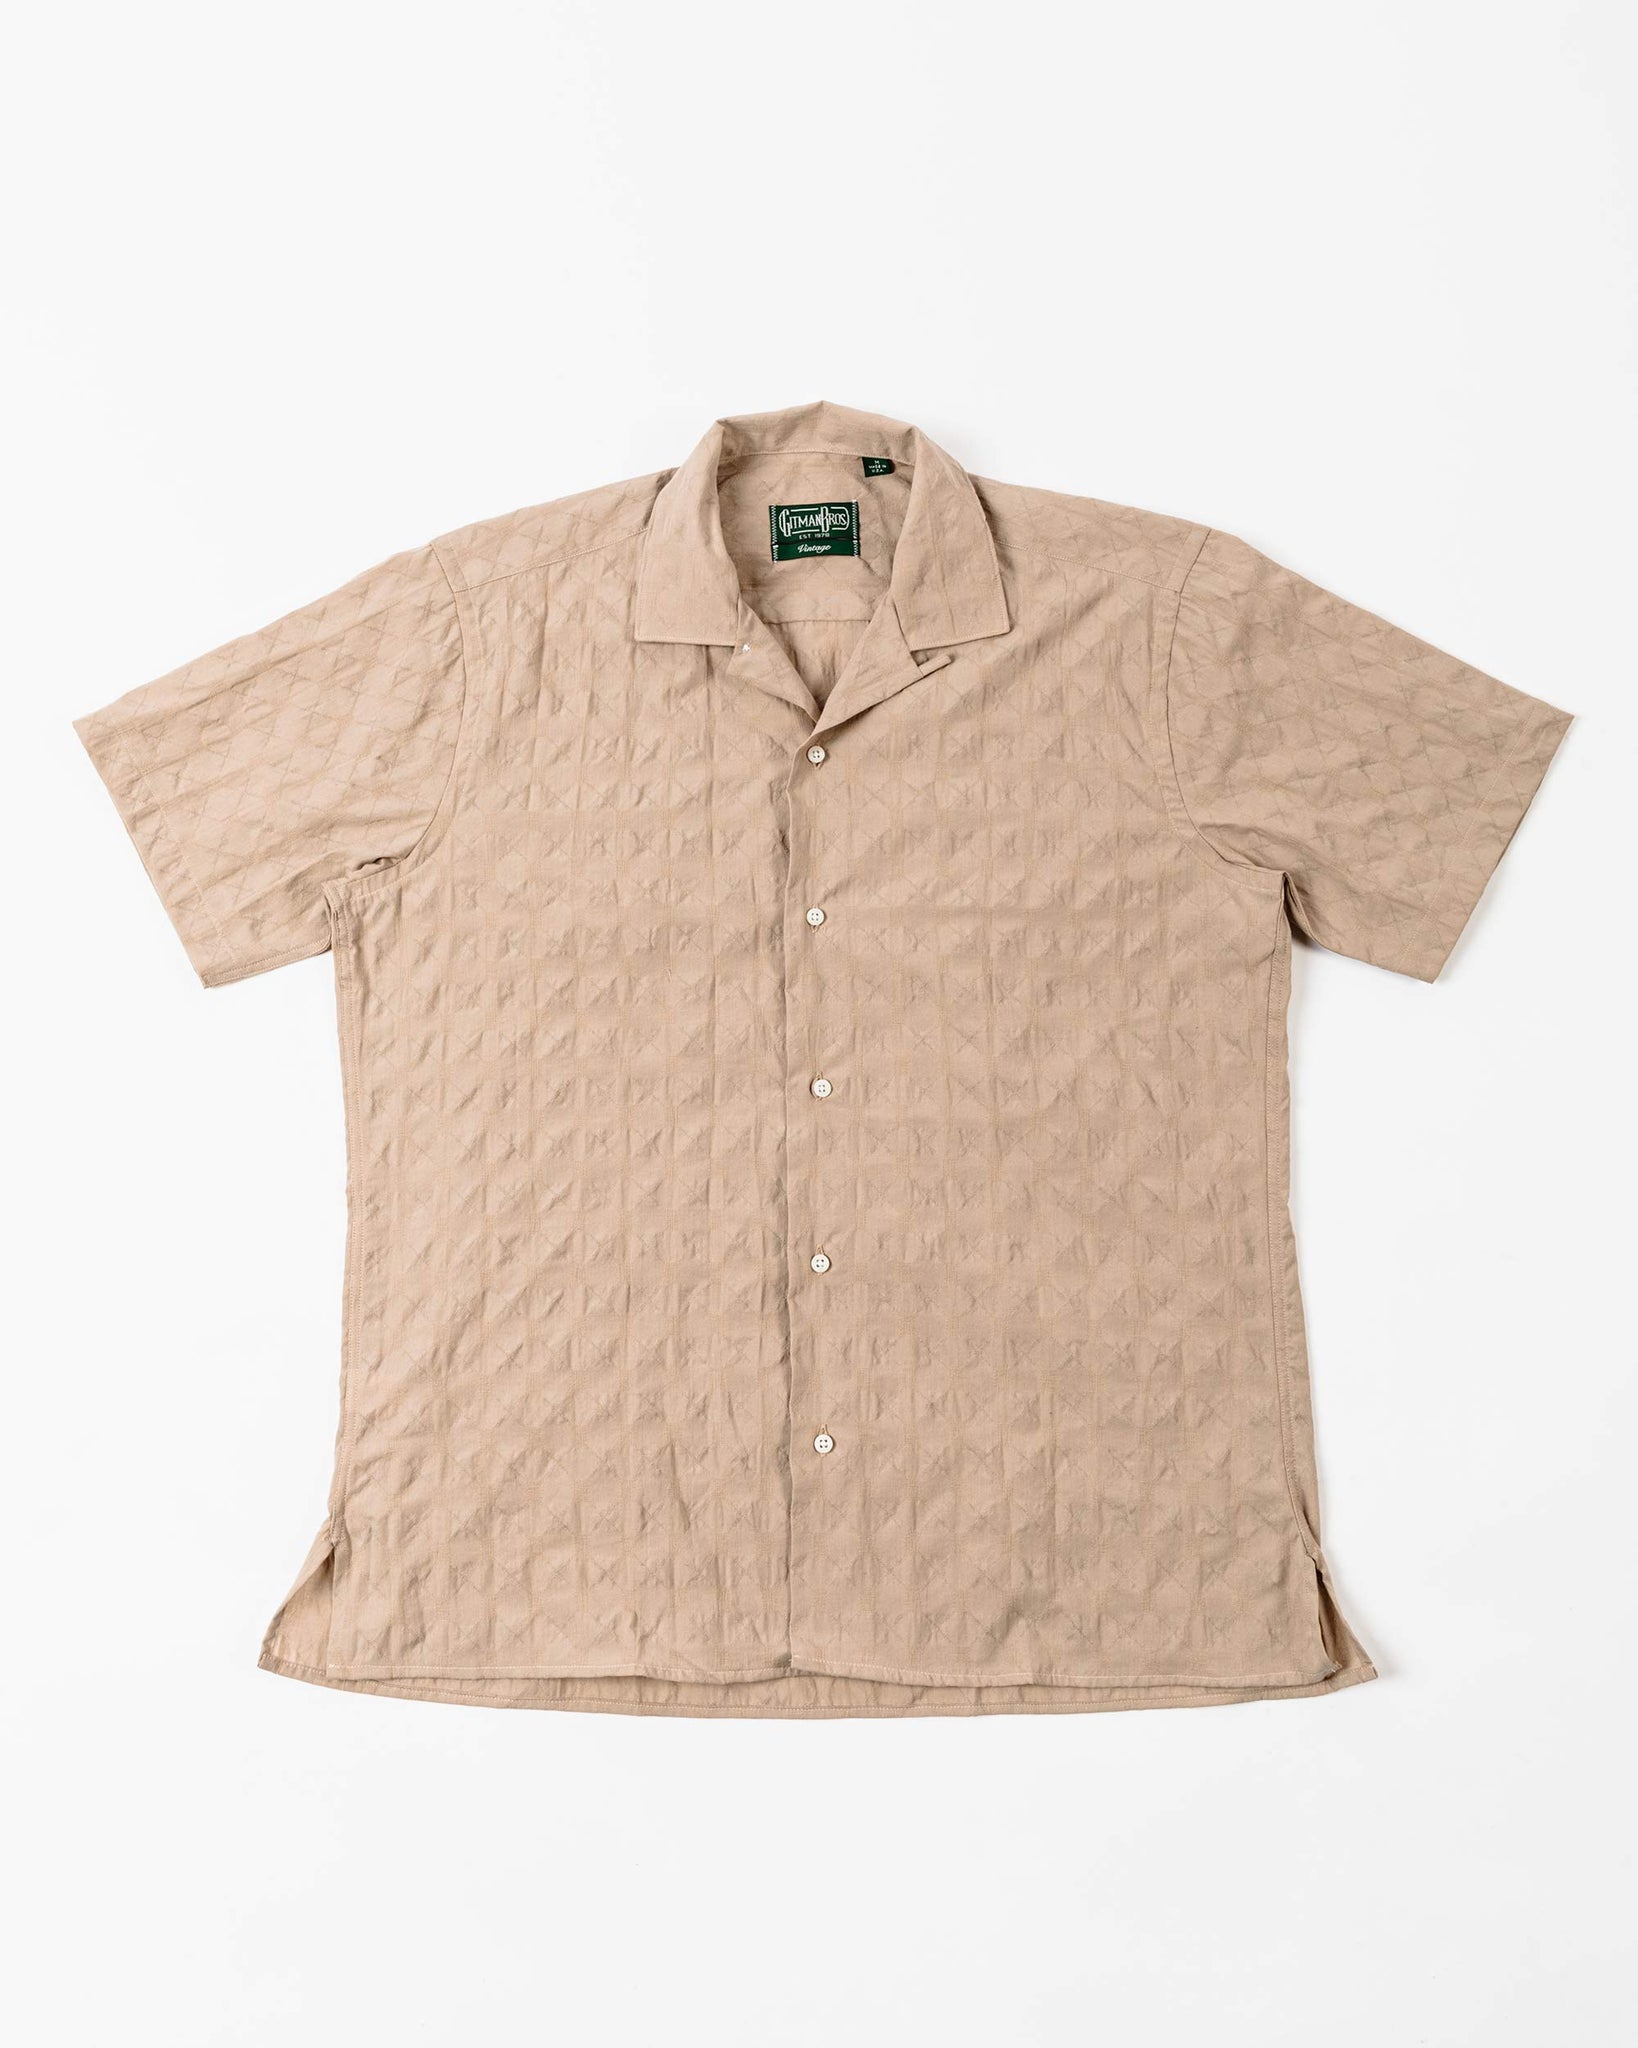 Gitman Vintage Bros. Tan Japanese Ripple Jacquard Camp Collar Shirt